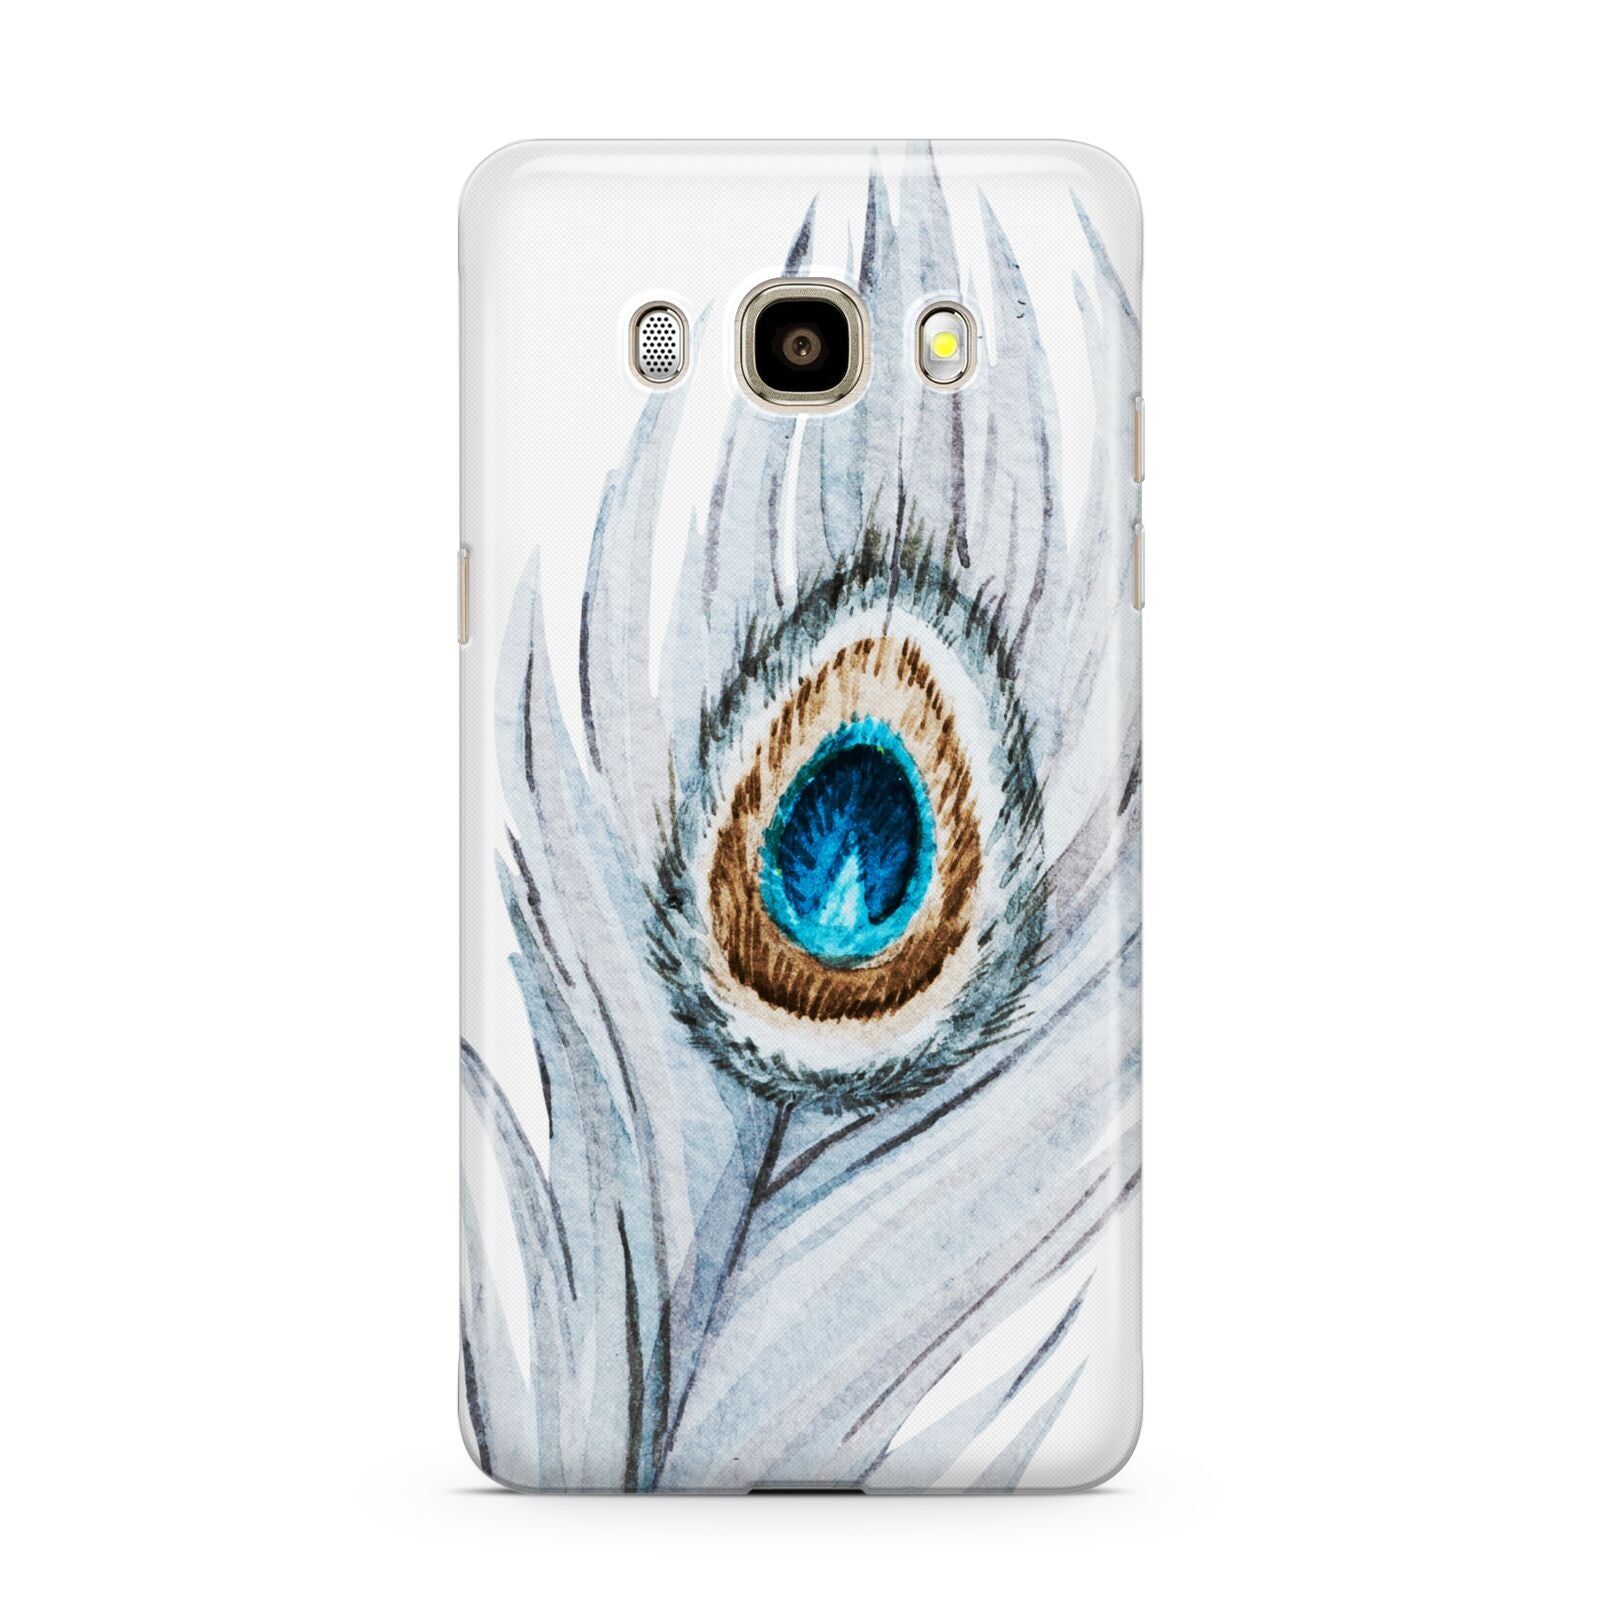 Peacock Samsung Galaxy J7 2016 Case on gold phone